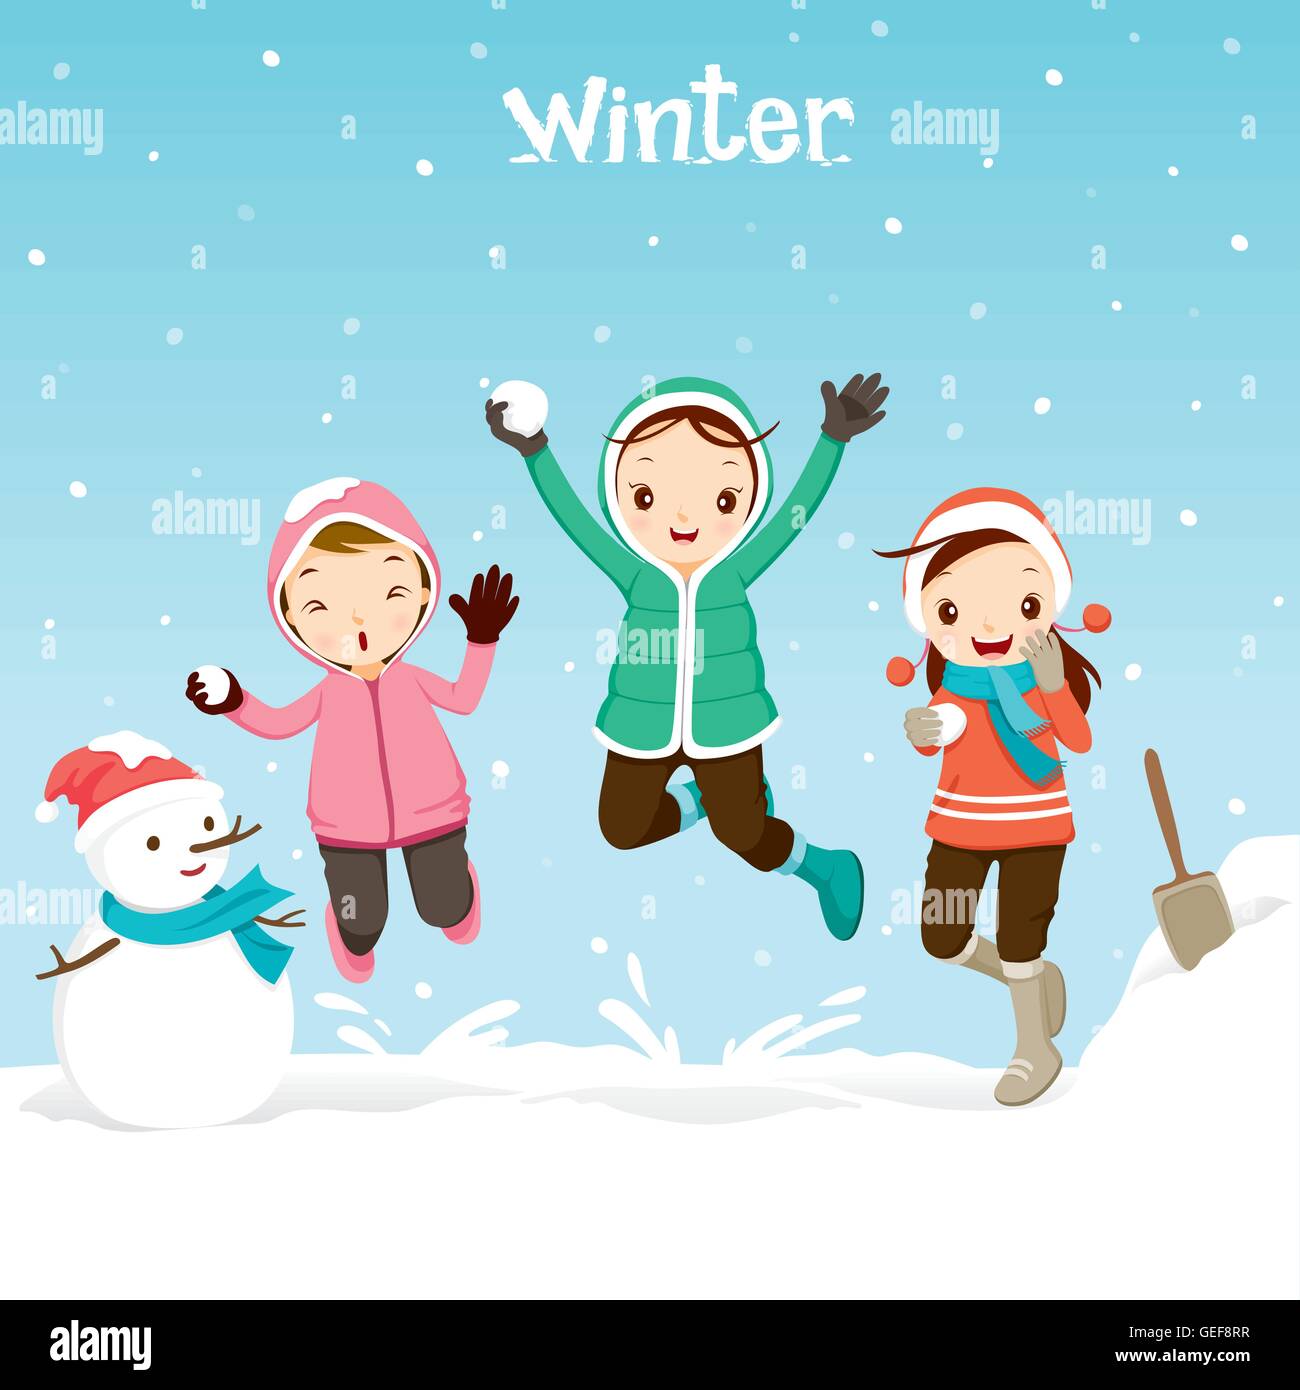 Children Playing Snow Together, Activity, Travel, Winter, Season ...